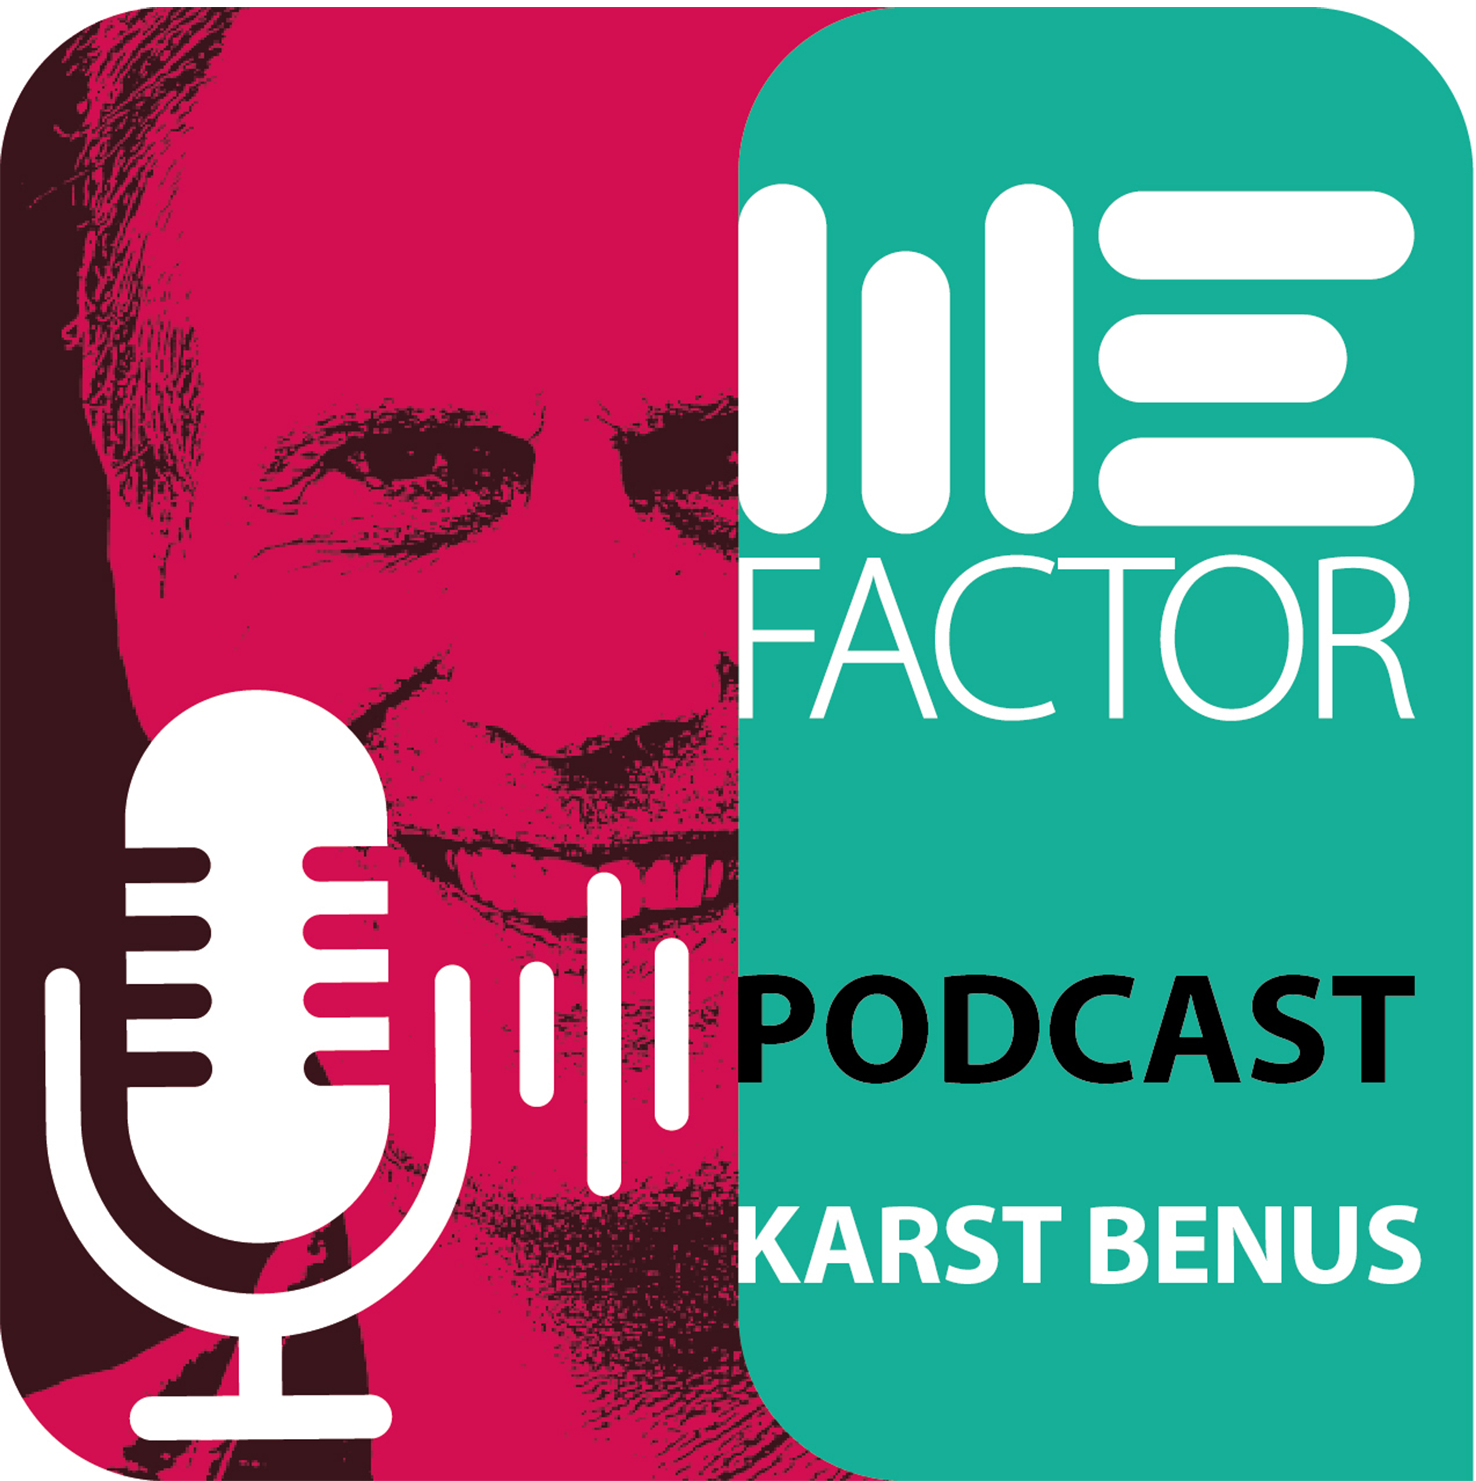 Podcast Karst Benus